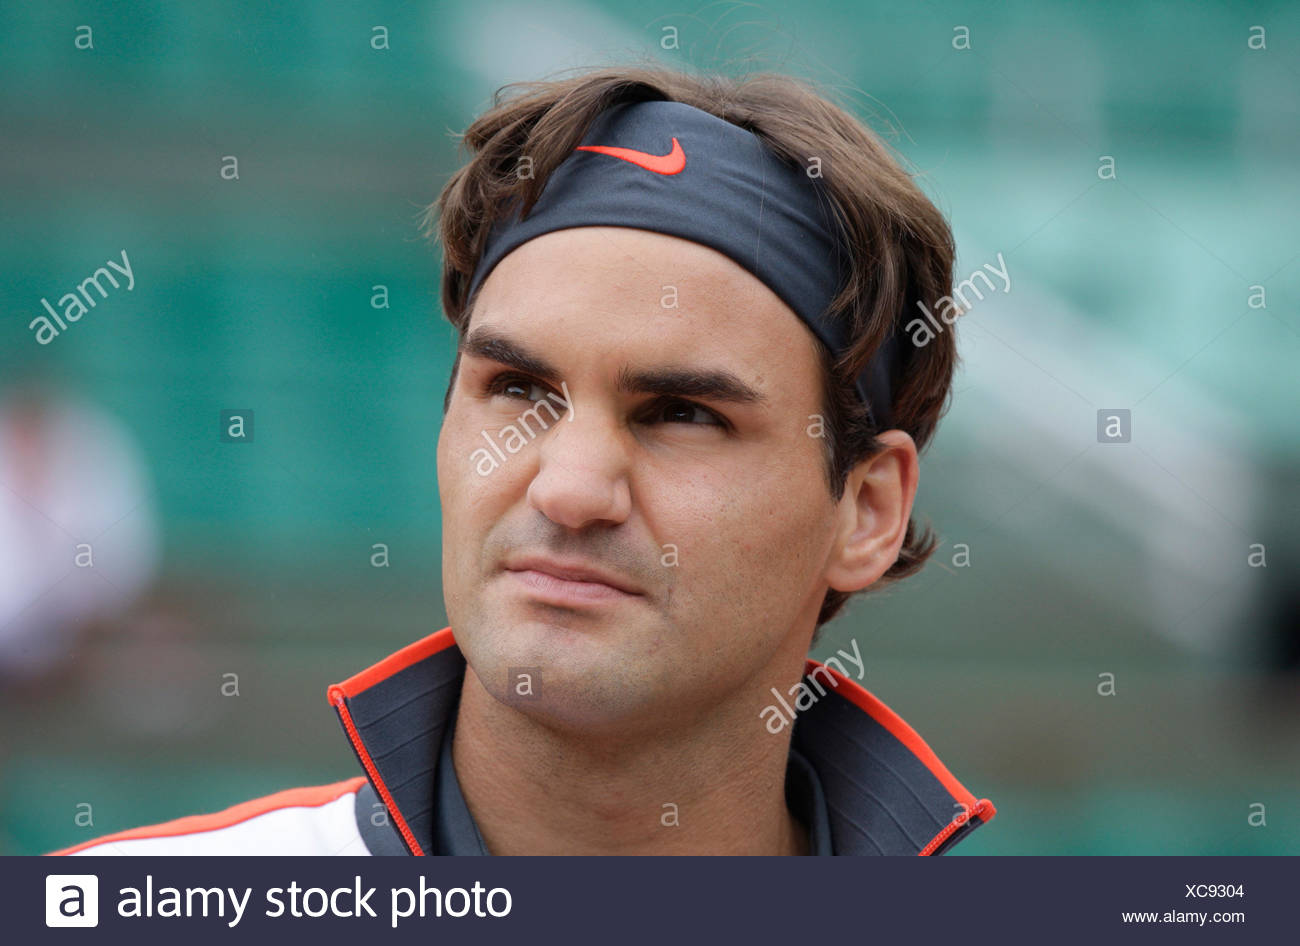 Federer Portrait Stock Photos & Federer Portrait Stock Images - Alamy1300 x 946